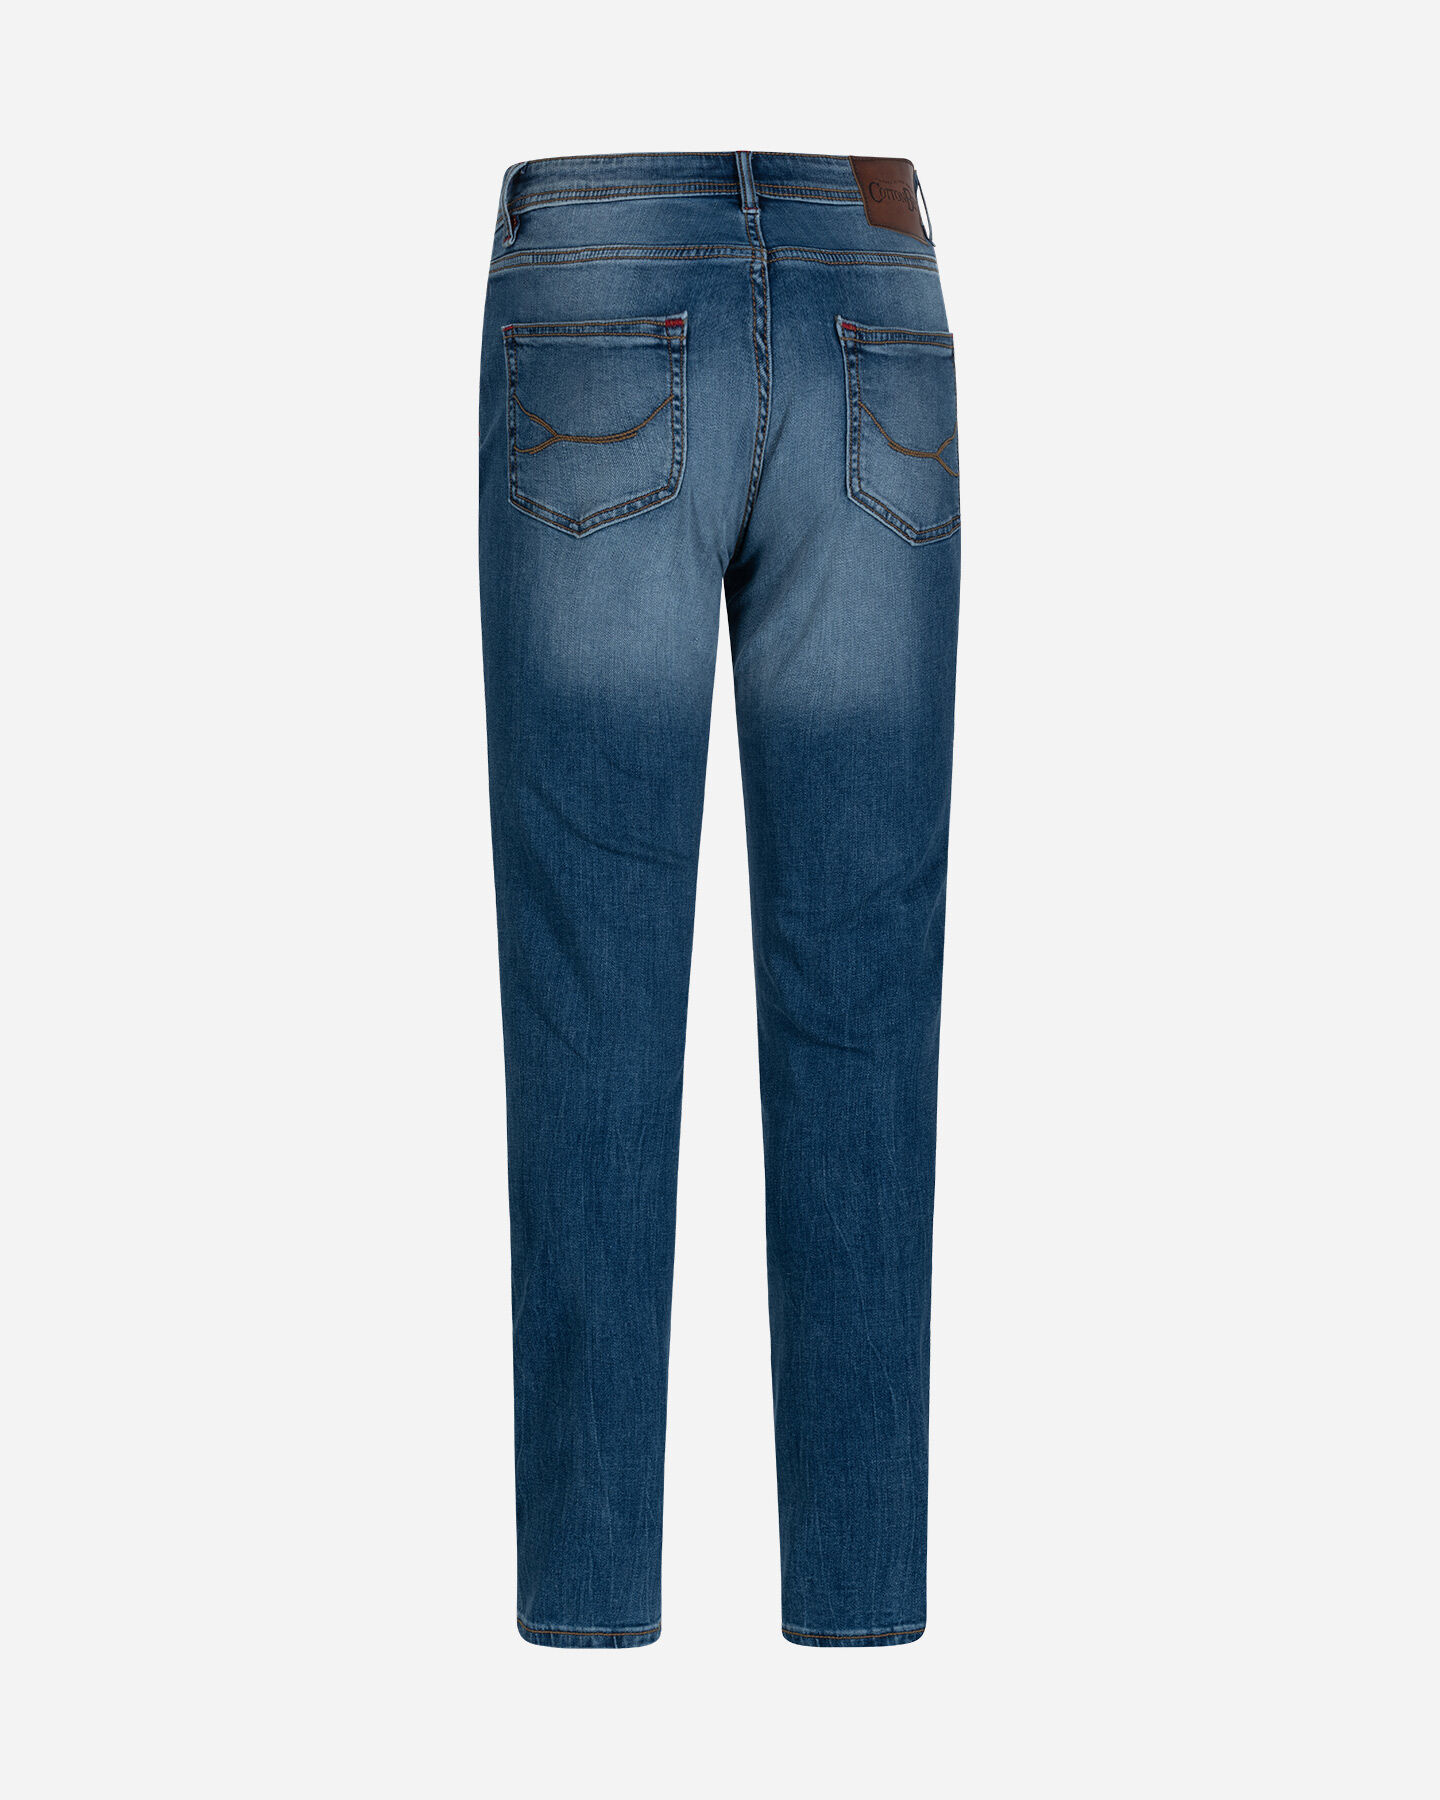  Jeans COTTON BELT 5 POCKET M S4126998|MD|30 scatto 5